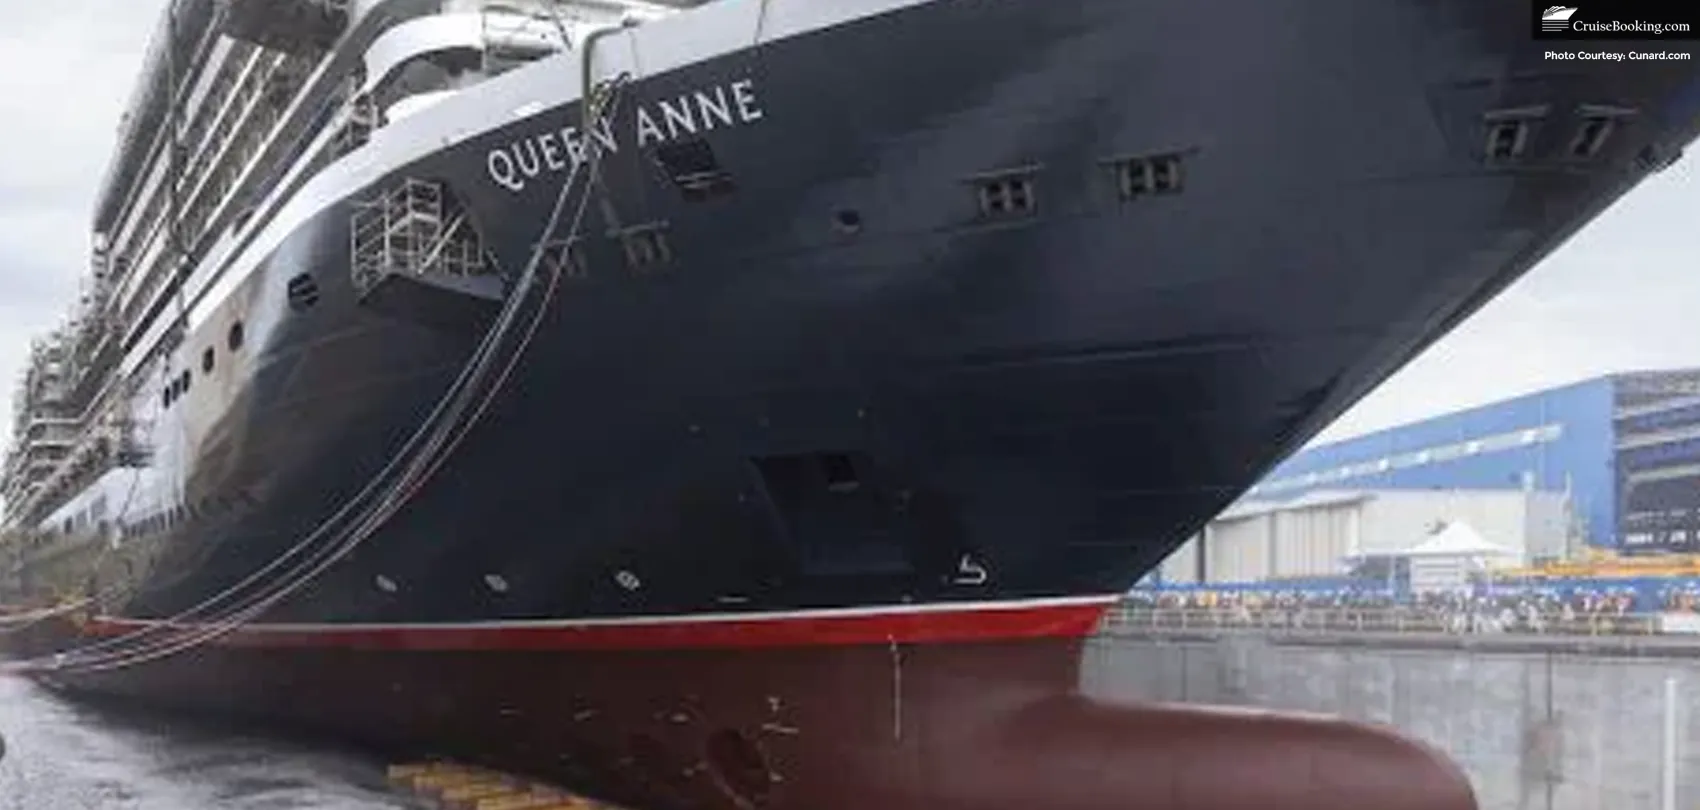 Cunard Offers Agents Shipyard Tour of Queen Anne